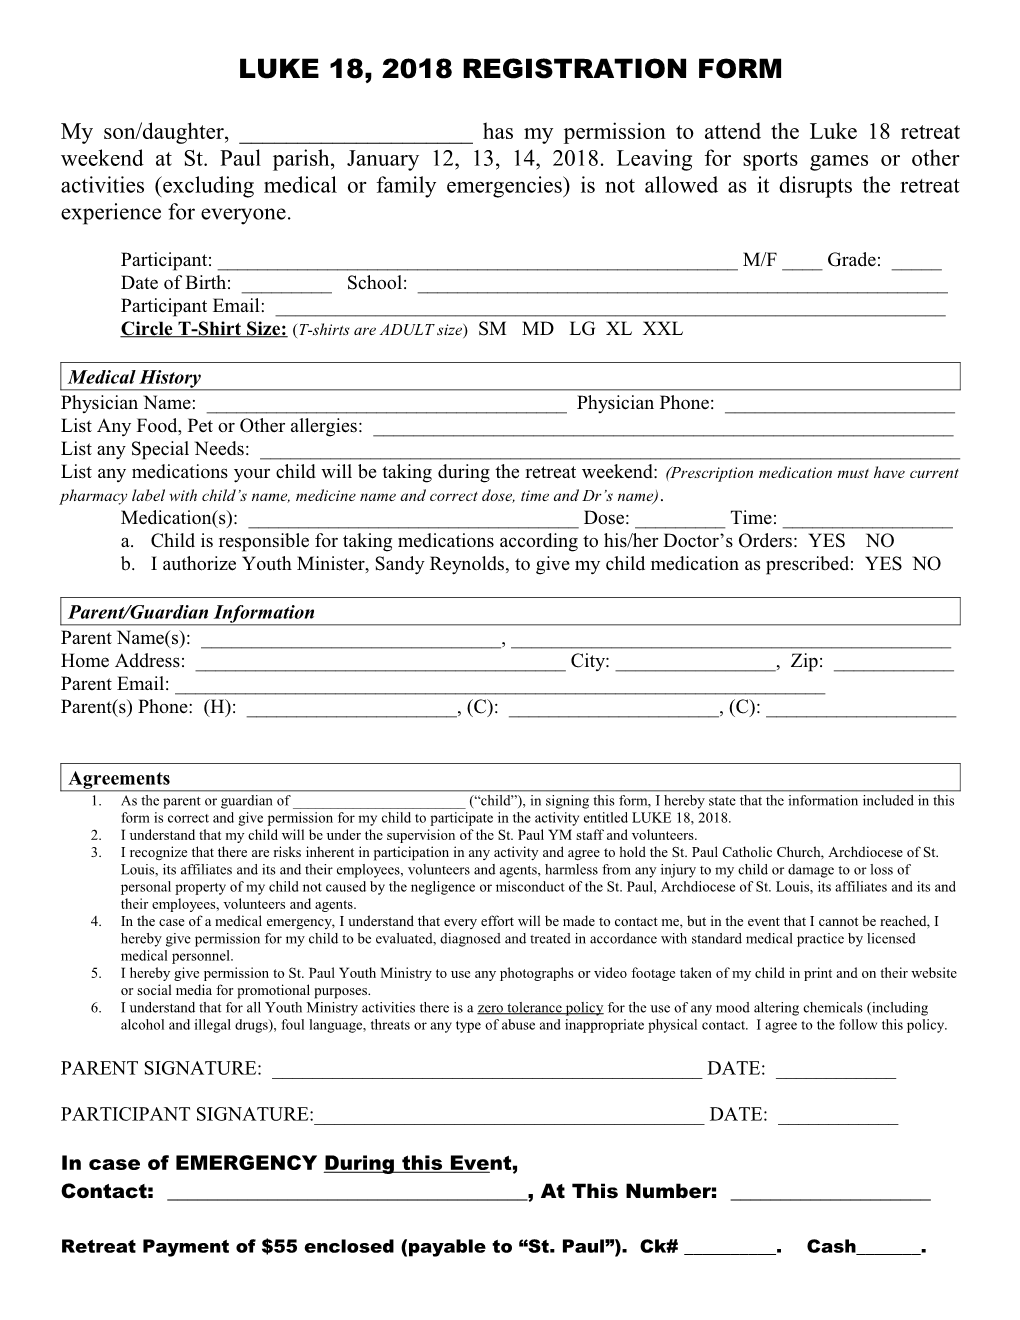 Luke 18 Registration Form